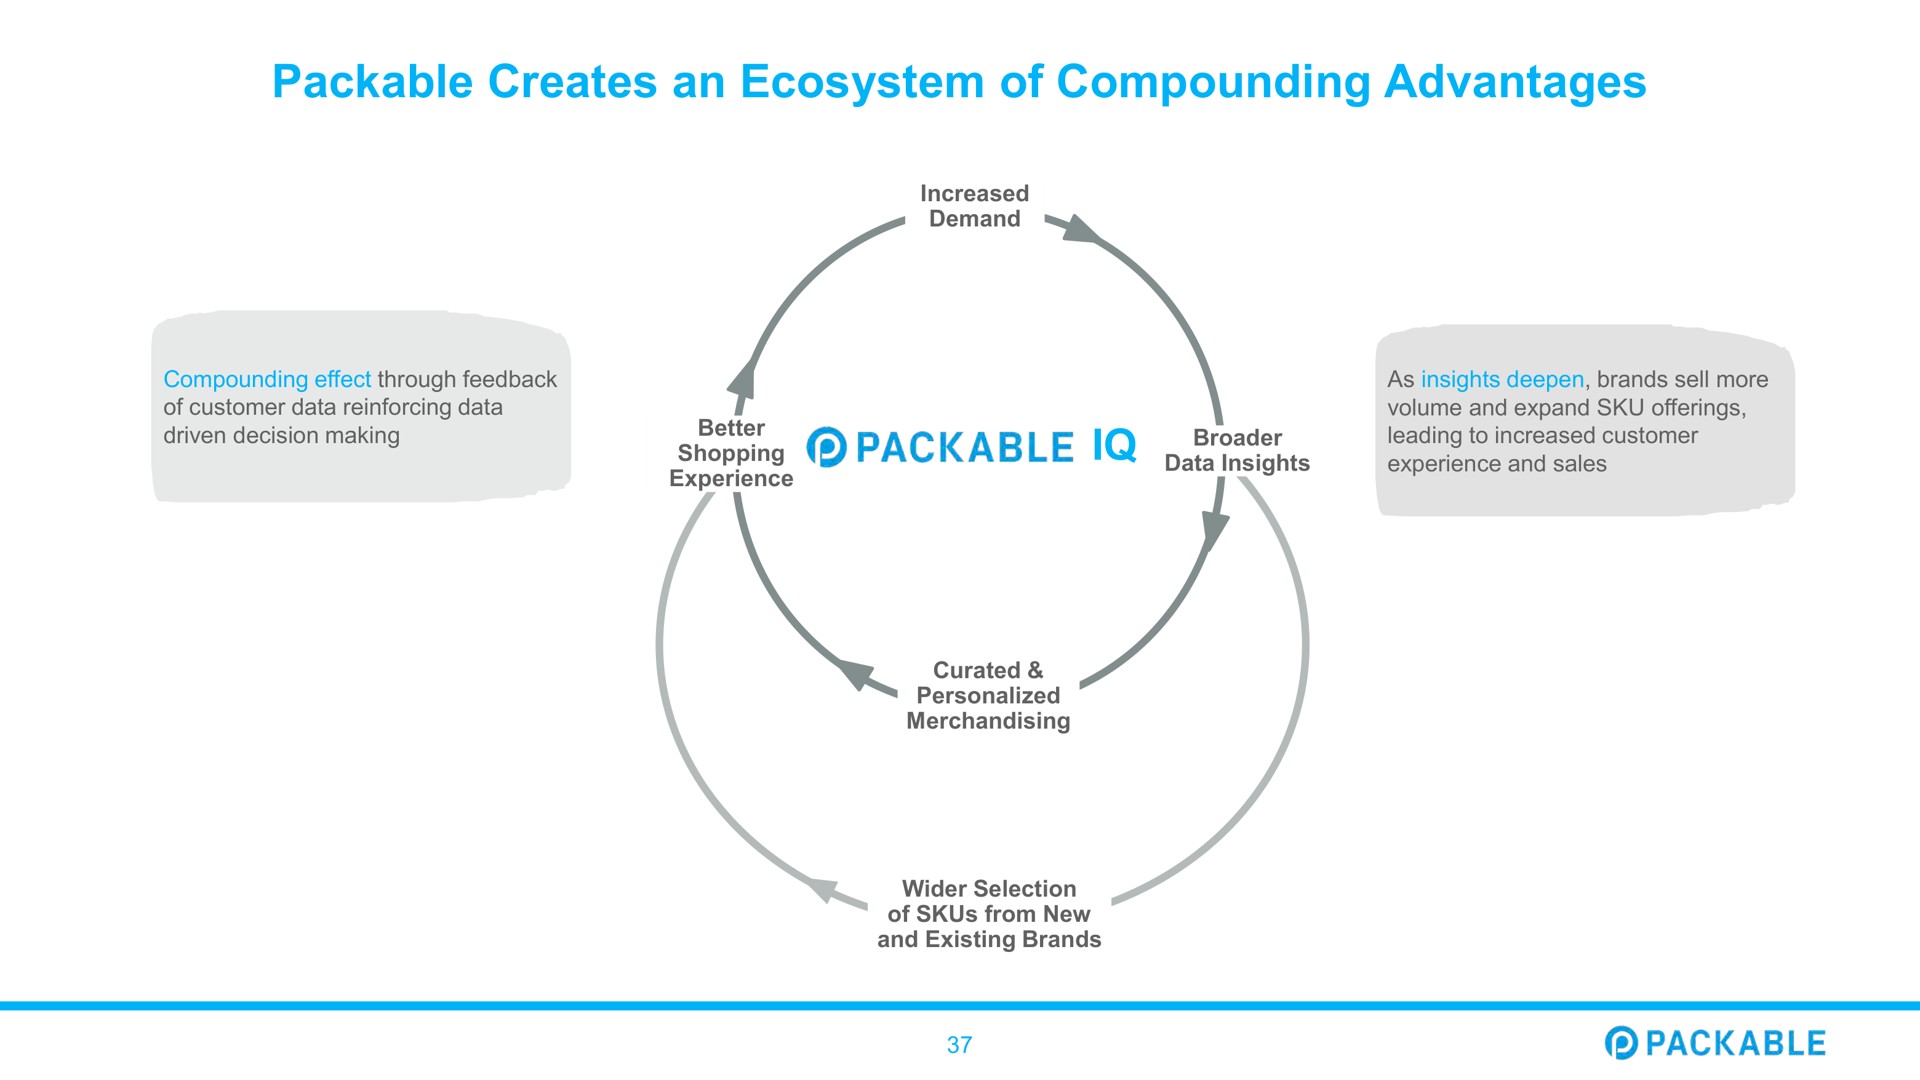 packable creates an ecosystem of compounding advantages | Packable